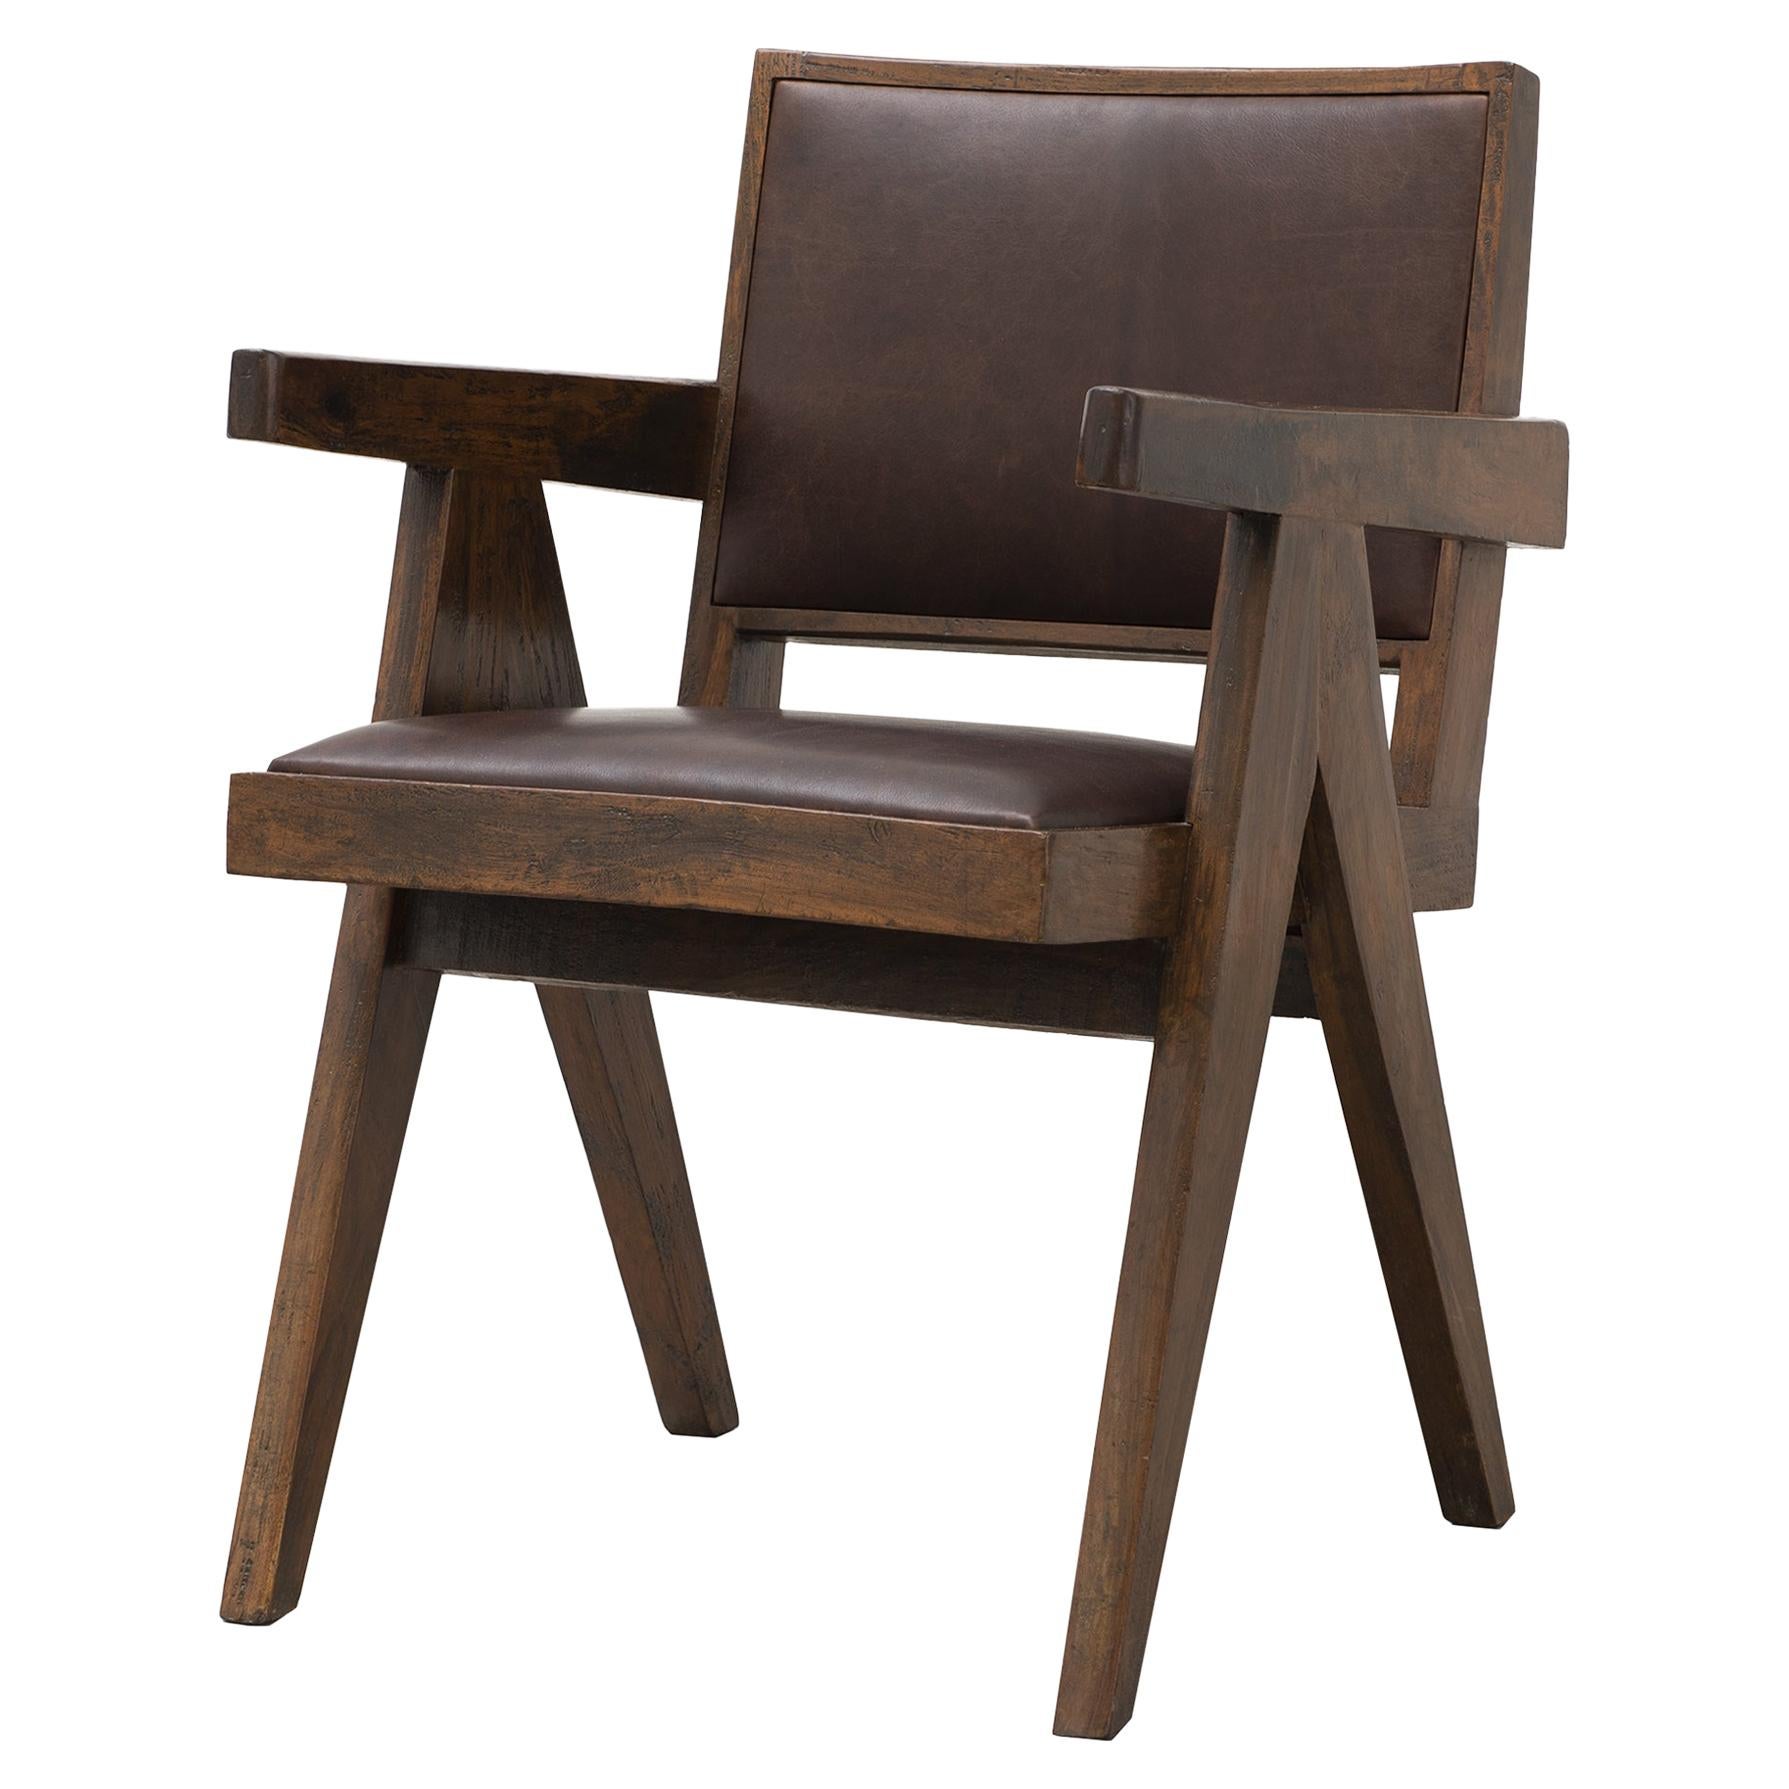 Pierre Jeanneret, "Office" Chair, circa 1955-1956